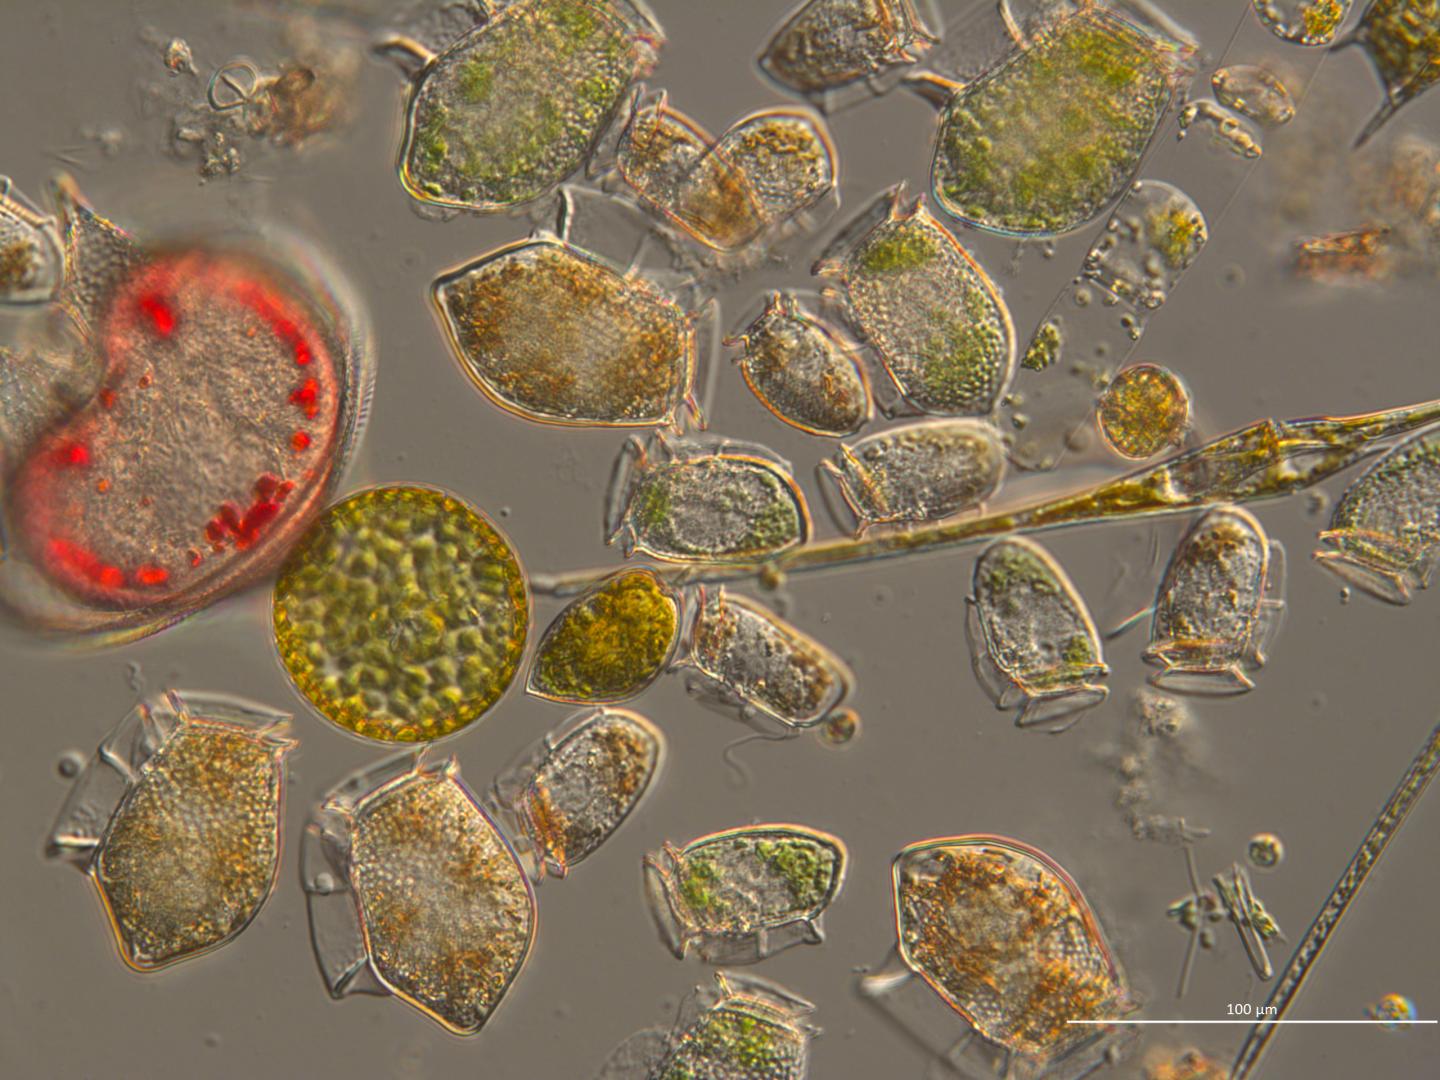 Dinoflagellates and Diatoms